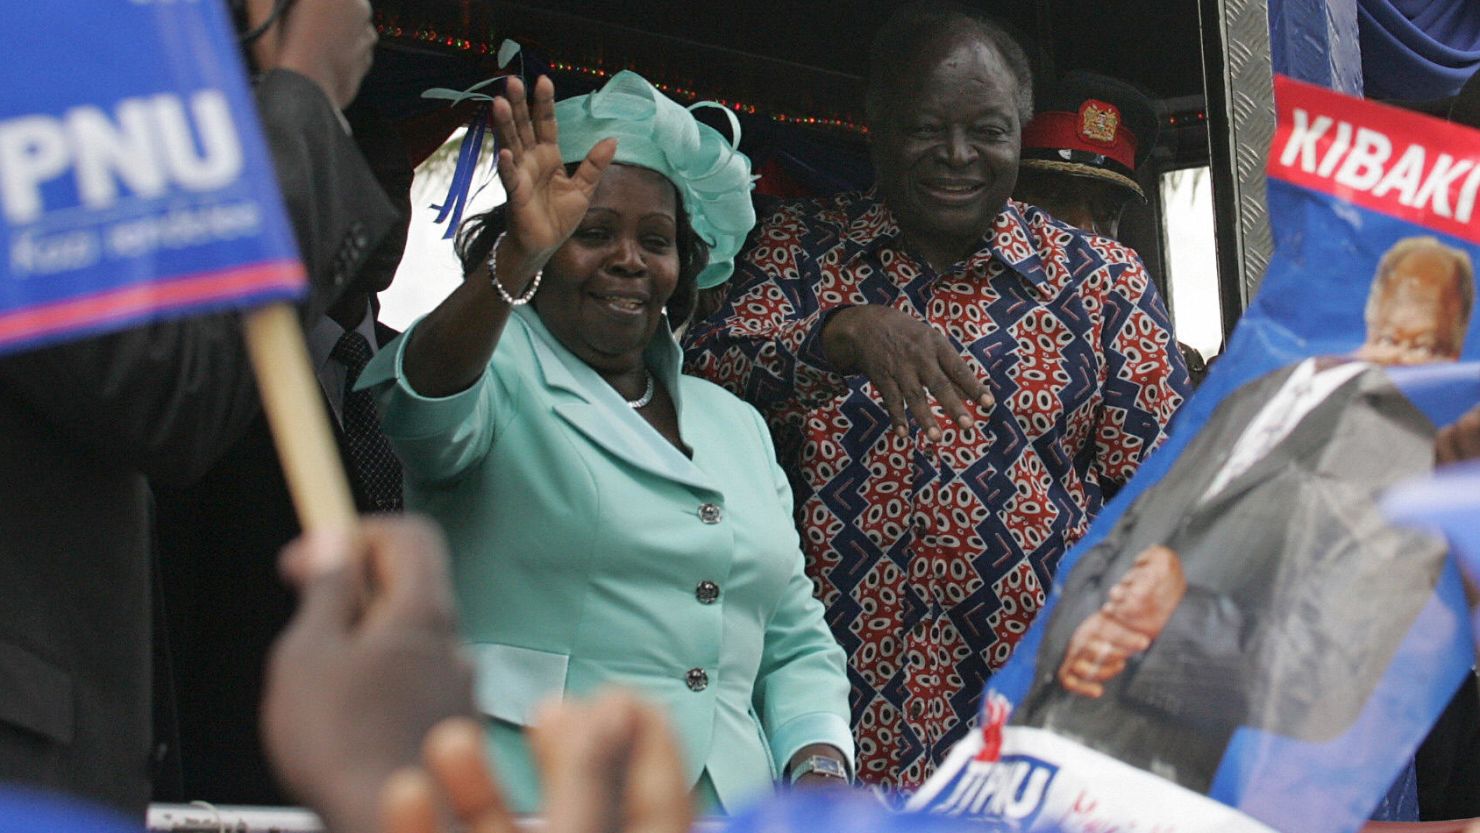 Former Kenyan first lady Lucy Kibaki with her husband, Mwai Kibaki, in Nairobi in 2007.